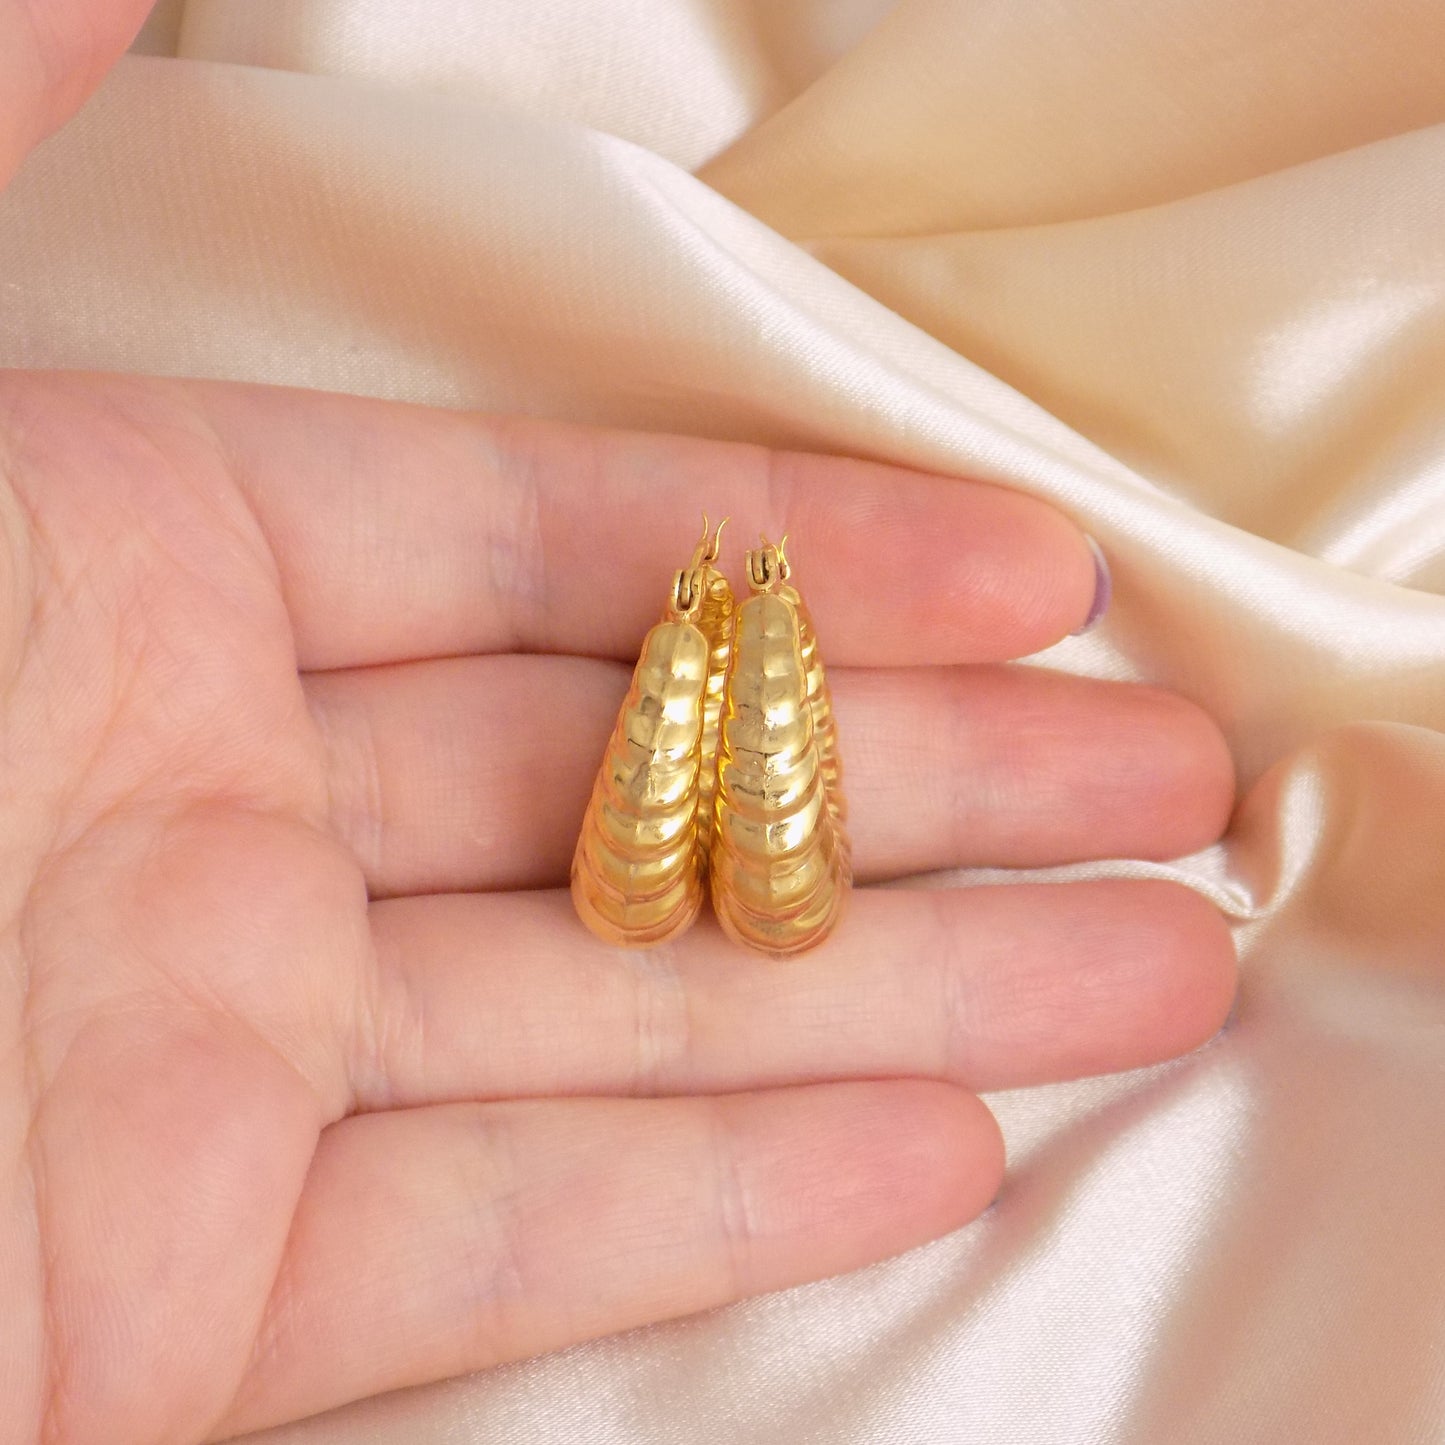 18K Gold Hoop Earrings Stainless Steel - Large Twisted Hoops - Trendy Modern Jewelry